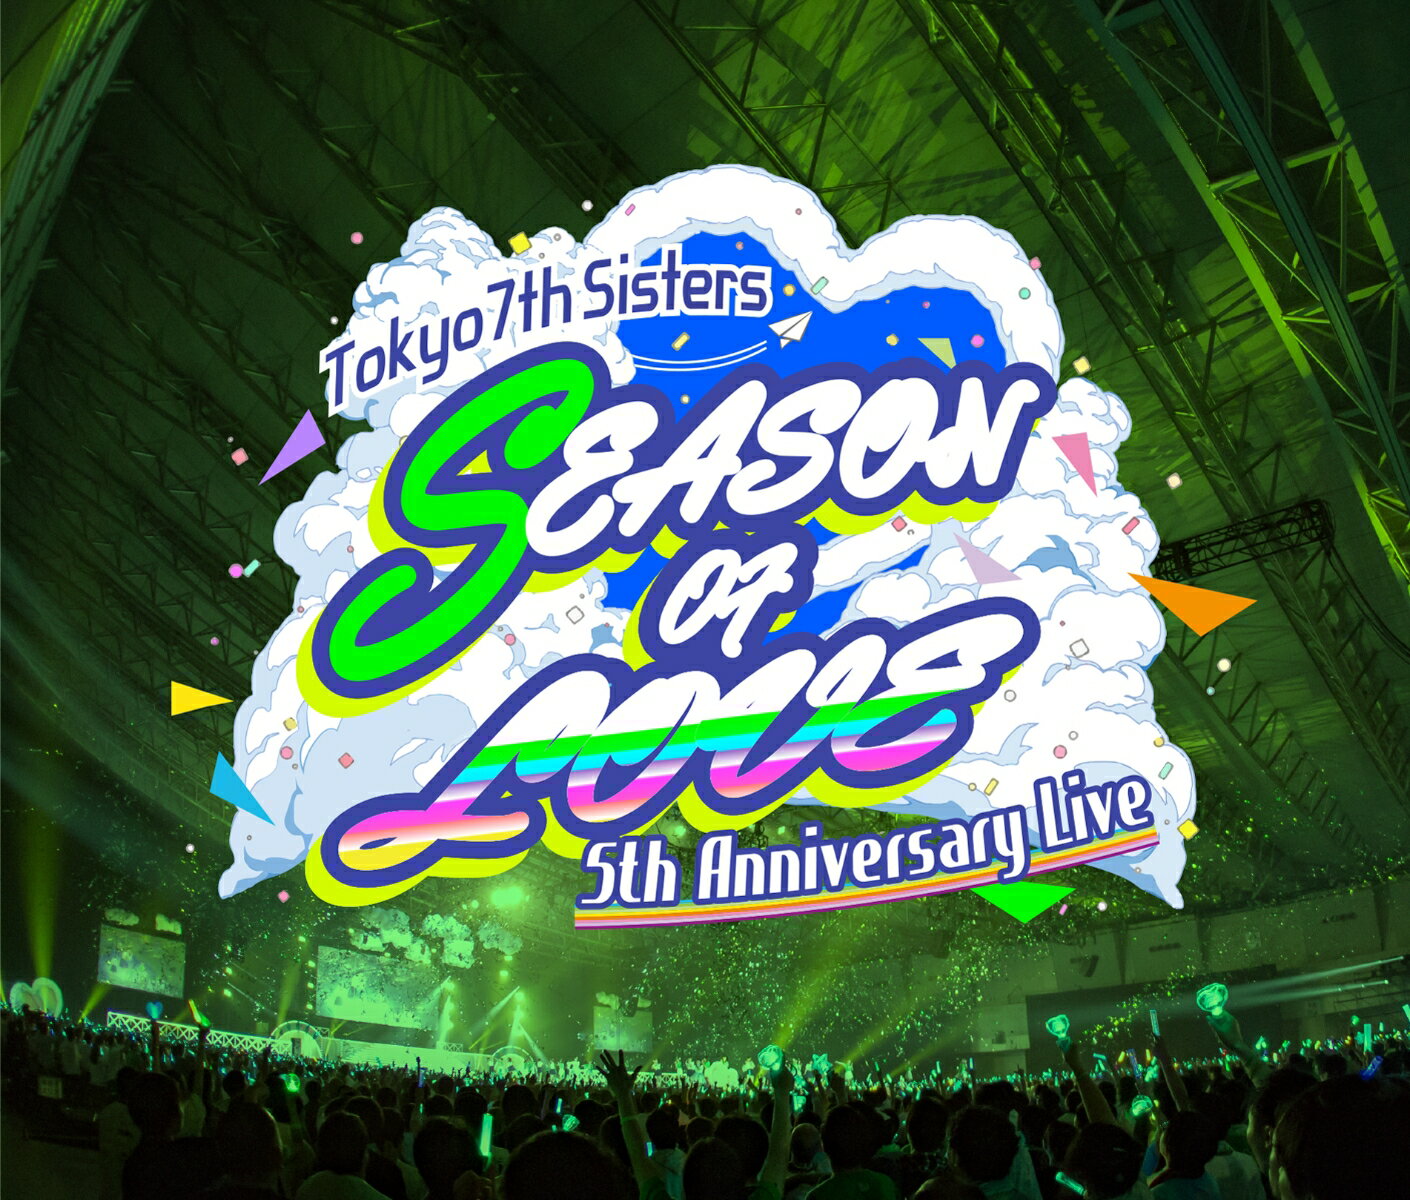 t7s 5th Anniversary Live -SEASON OF LOVE- in Makuhari Messe Tokyo 7th シスターズ